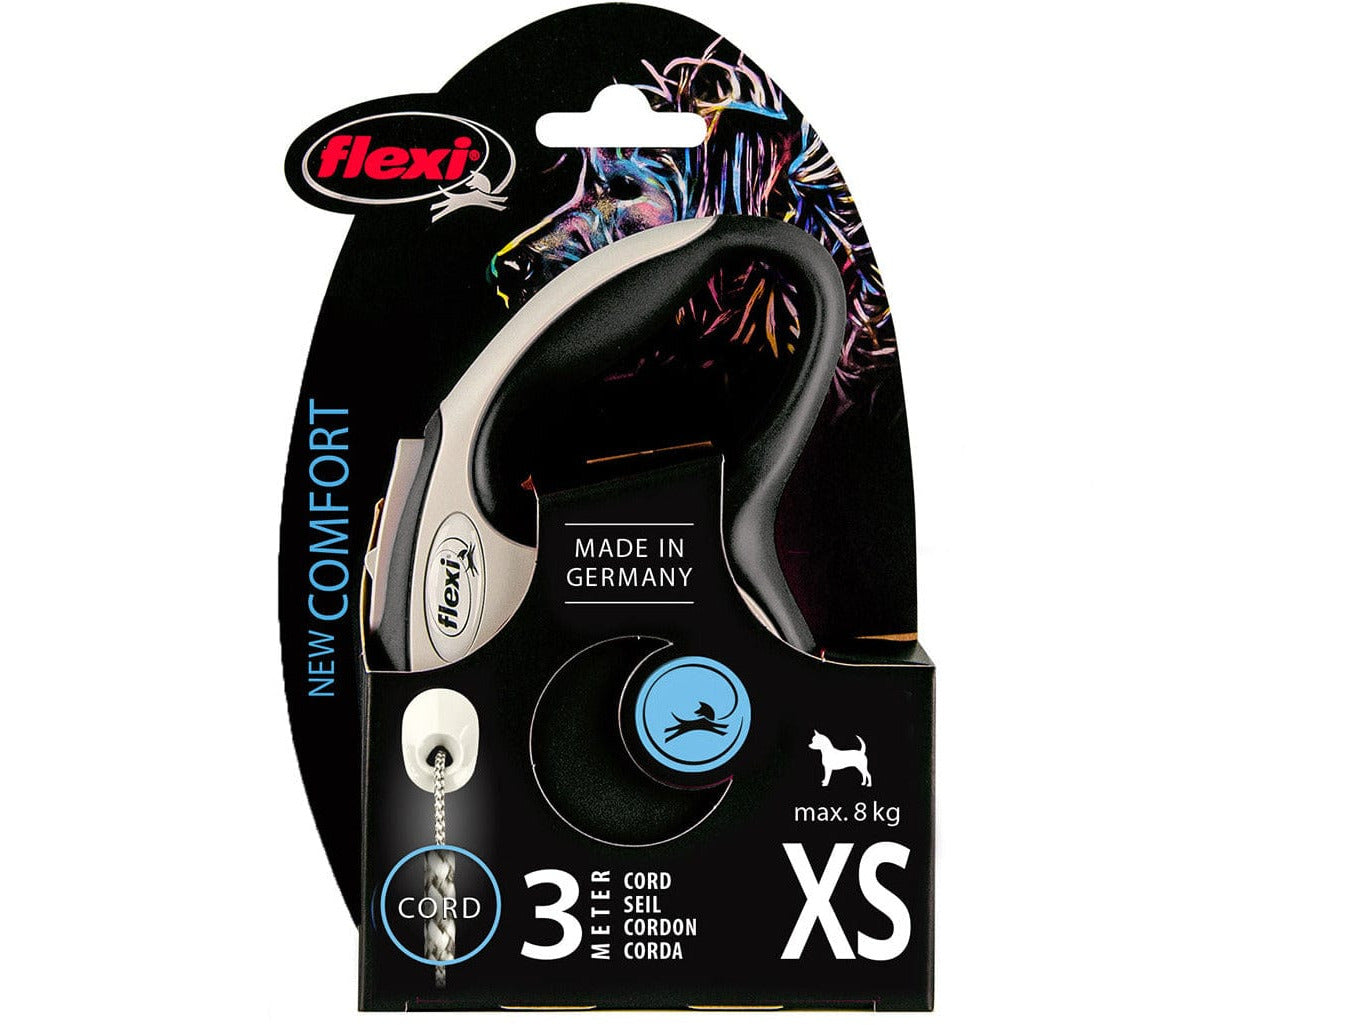 Flexi new comfort cord XS/3M black